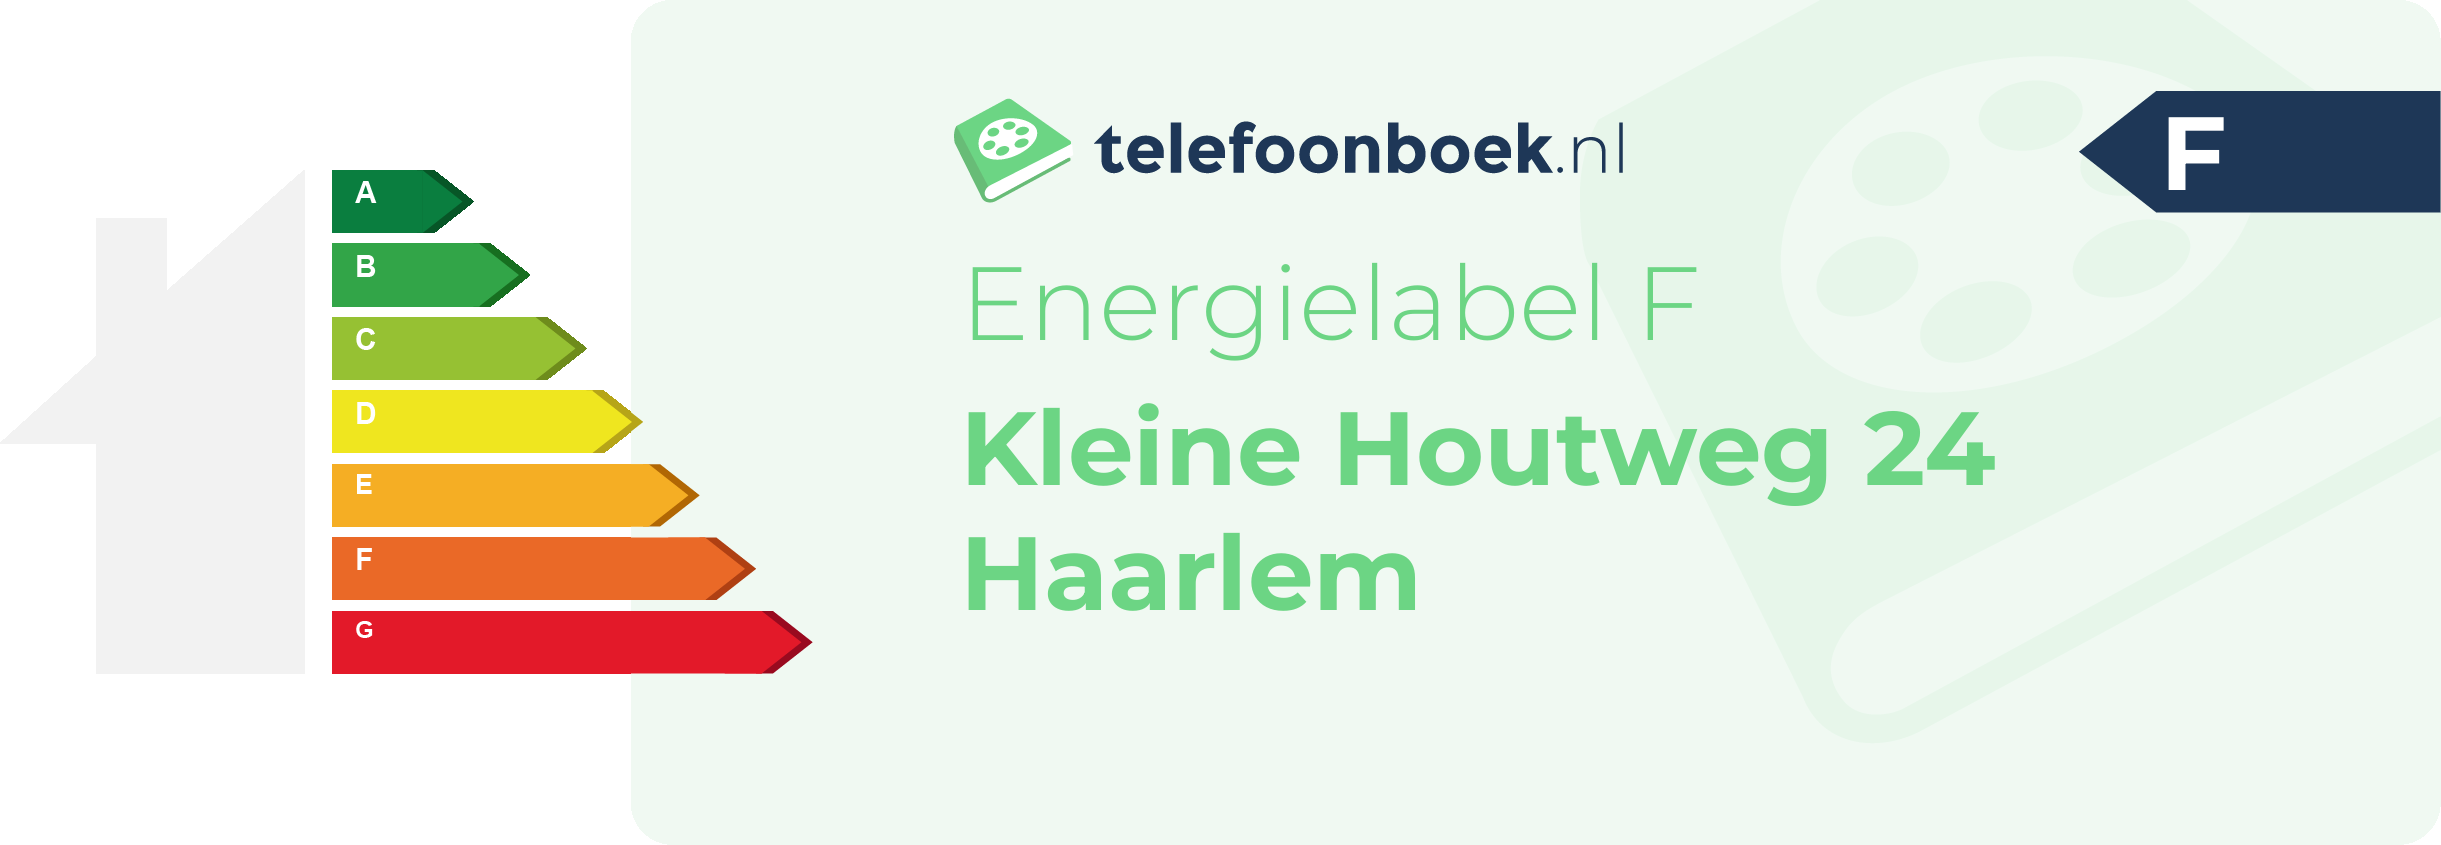 Energielabel Kleine Houtweg 24 Haarlem